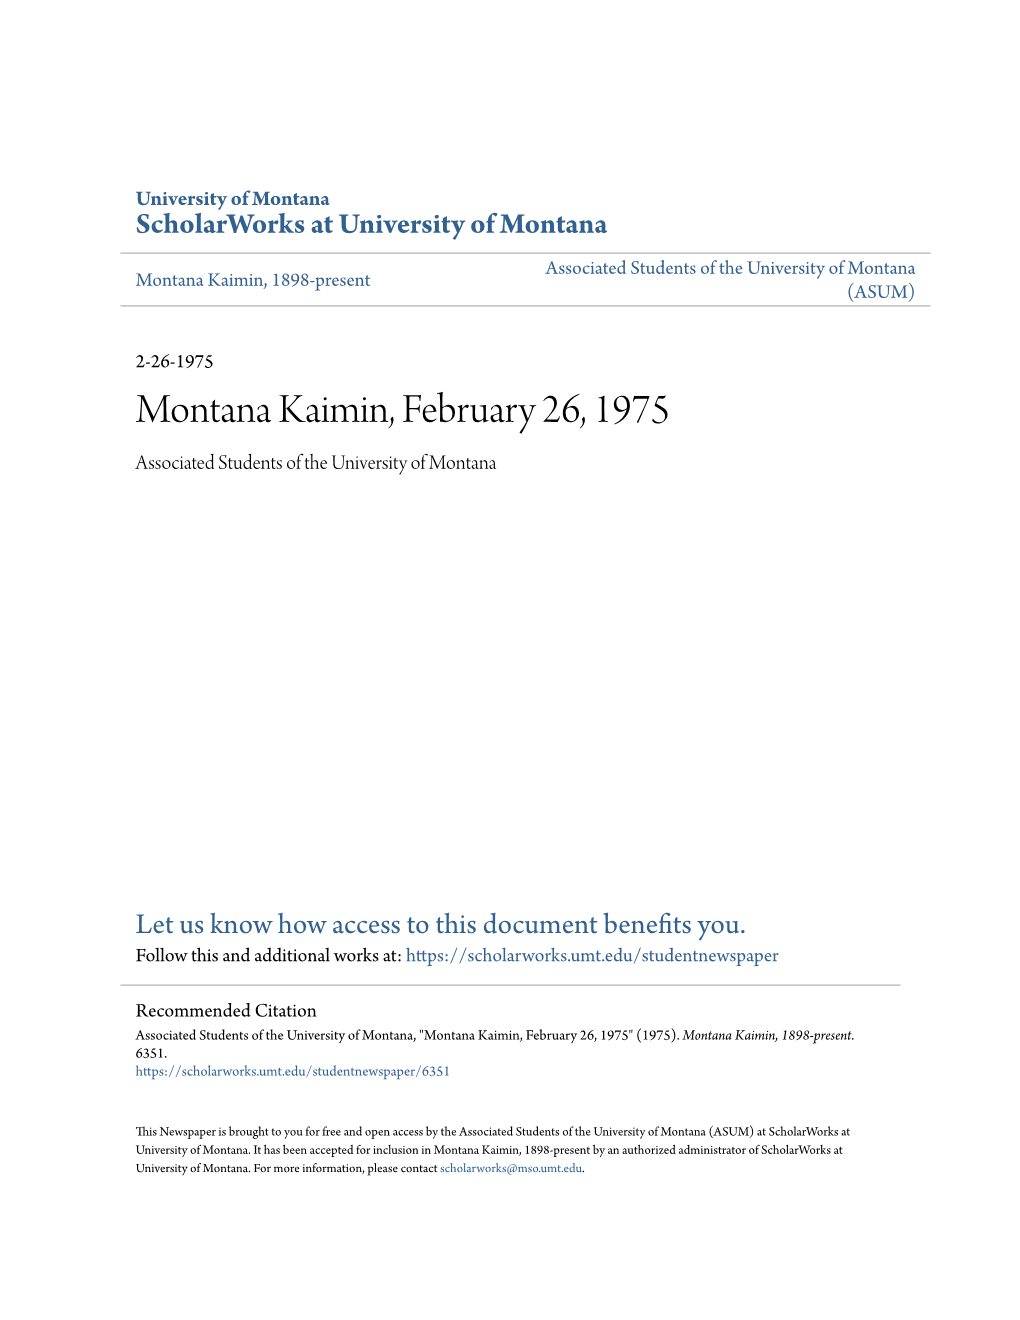 Montana Kaimin, February 26, 1975 Associated Students of the University of Montana